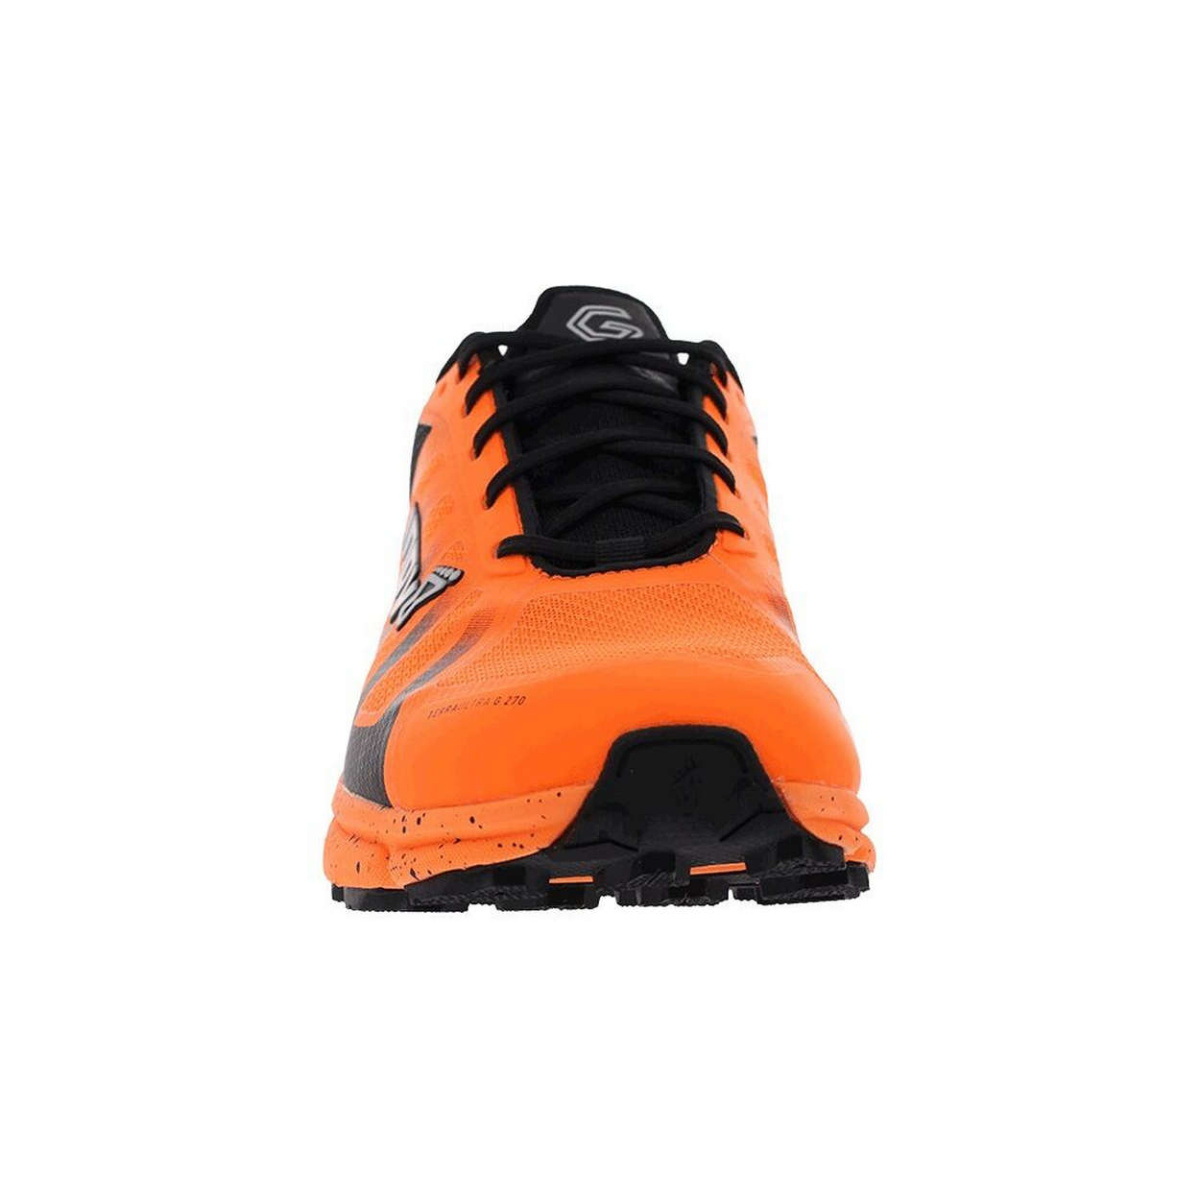 inov 8 Terra Ultra G 270 Orange zero drop trail running shoe Fast and Light CH 006